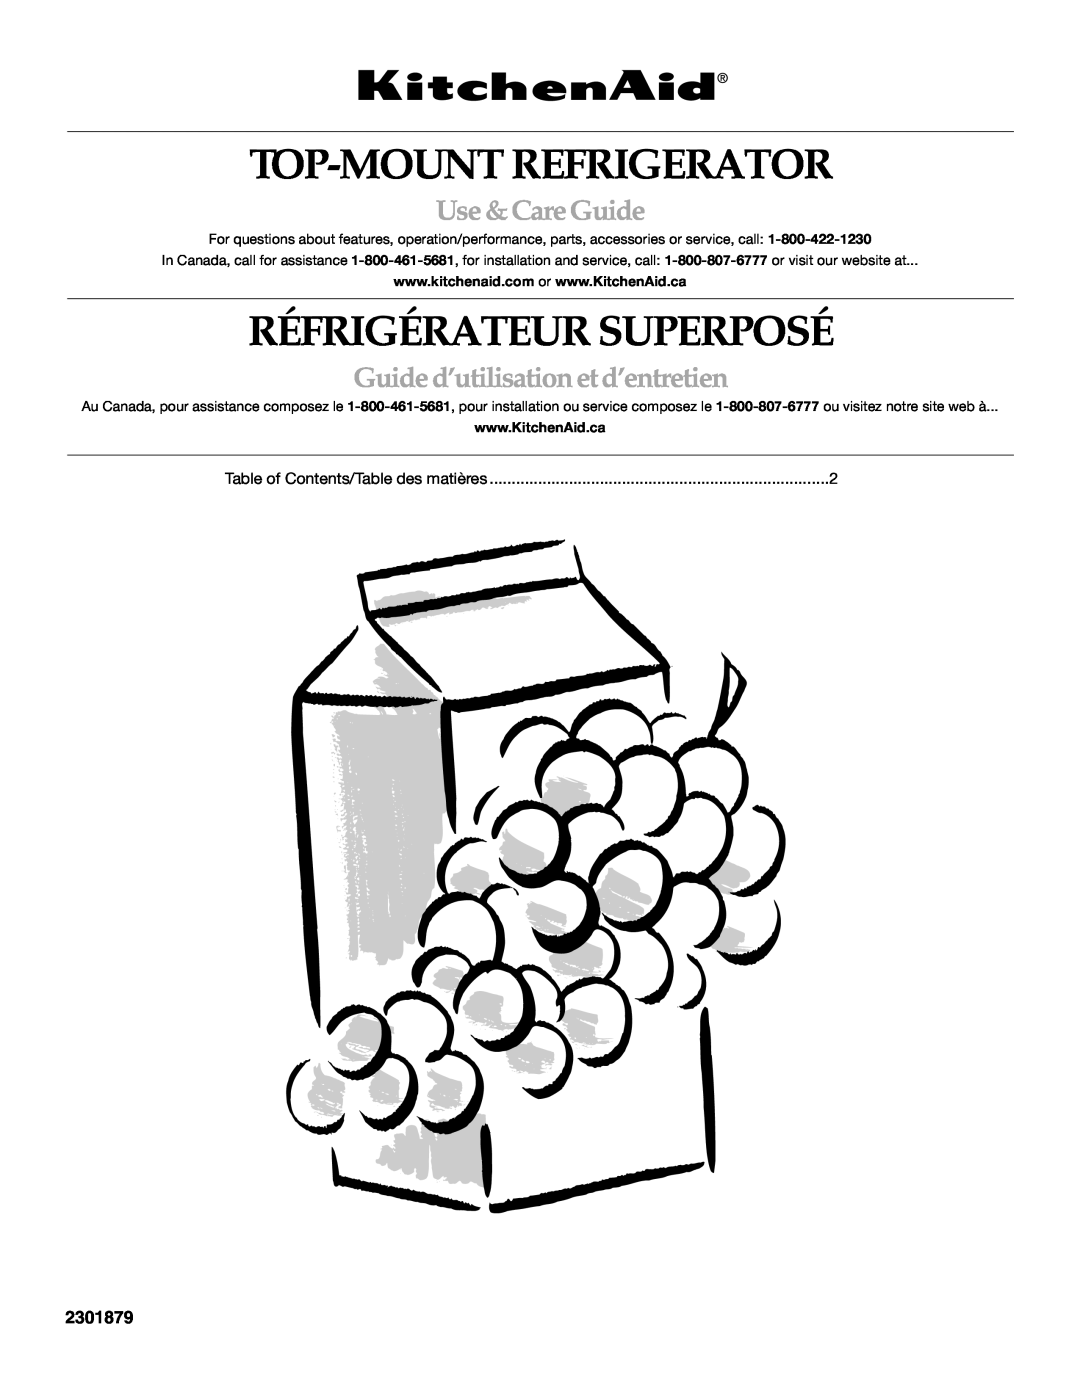 KitchenAid TOP-MOUNT REFRIGERATOR manual 2301879, Top-Mount Refrigerator, Réfrigérateur Superposé, Use &CareGuide 